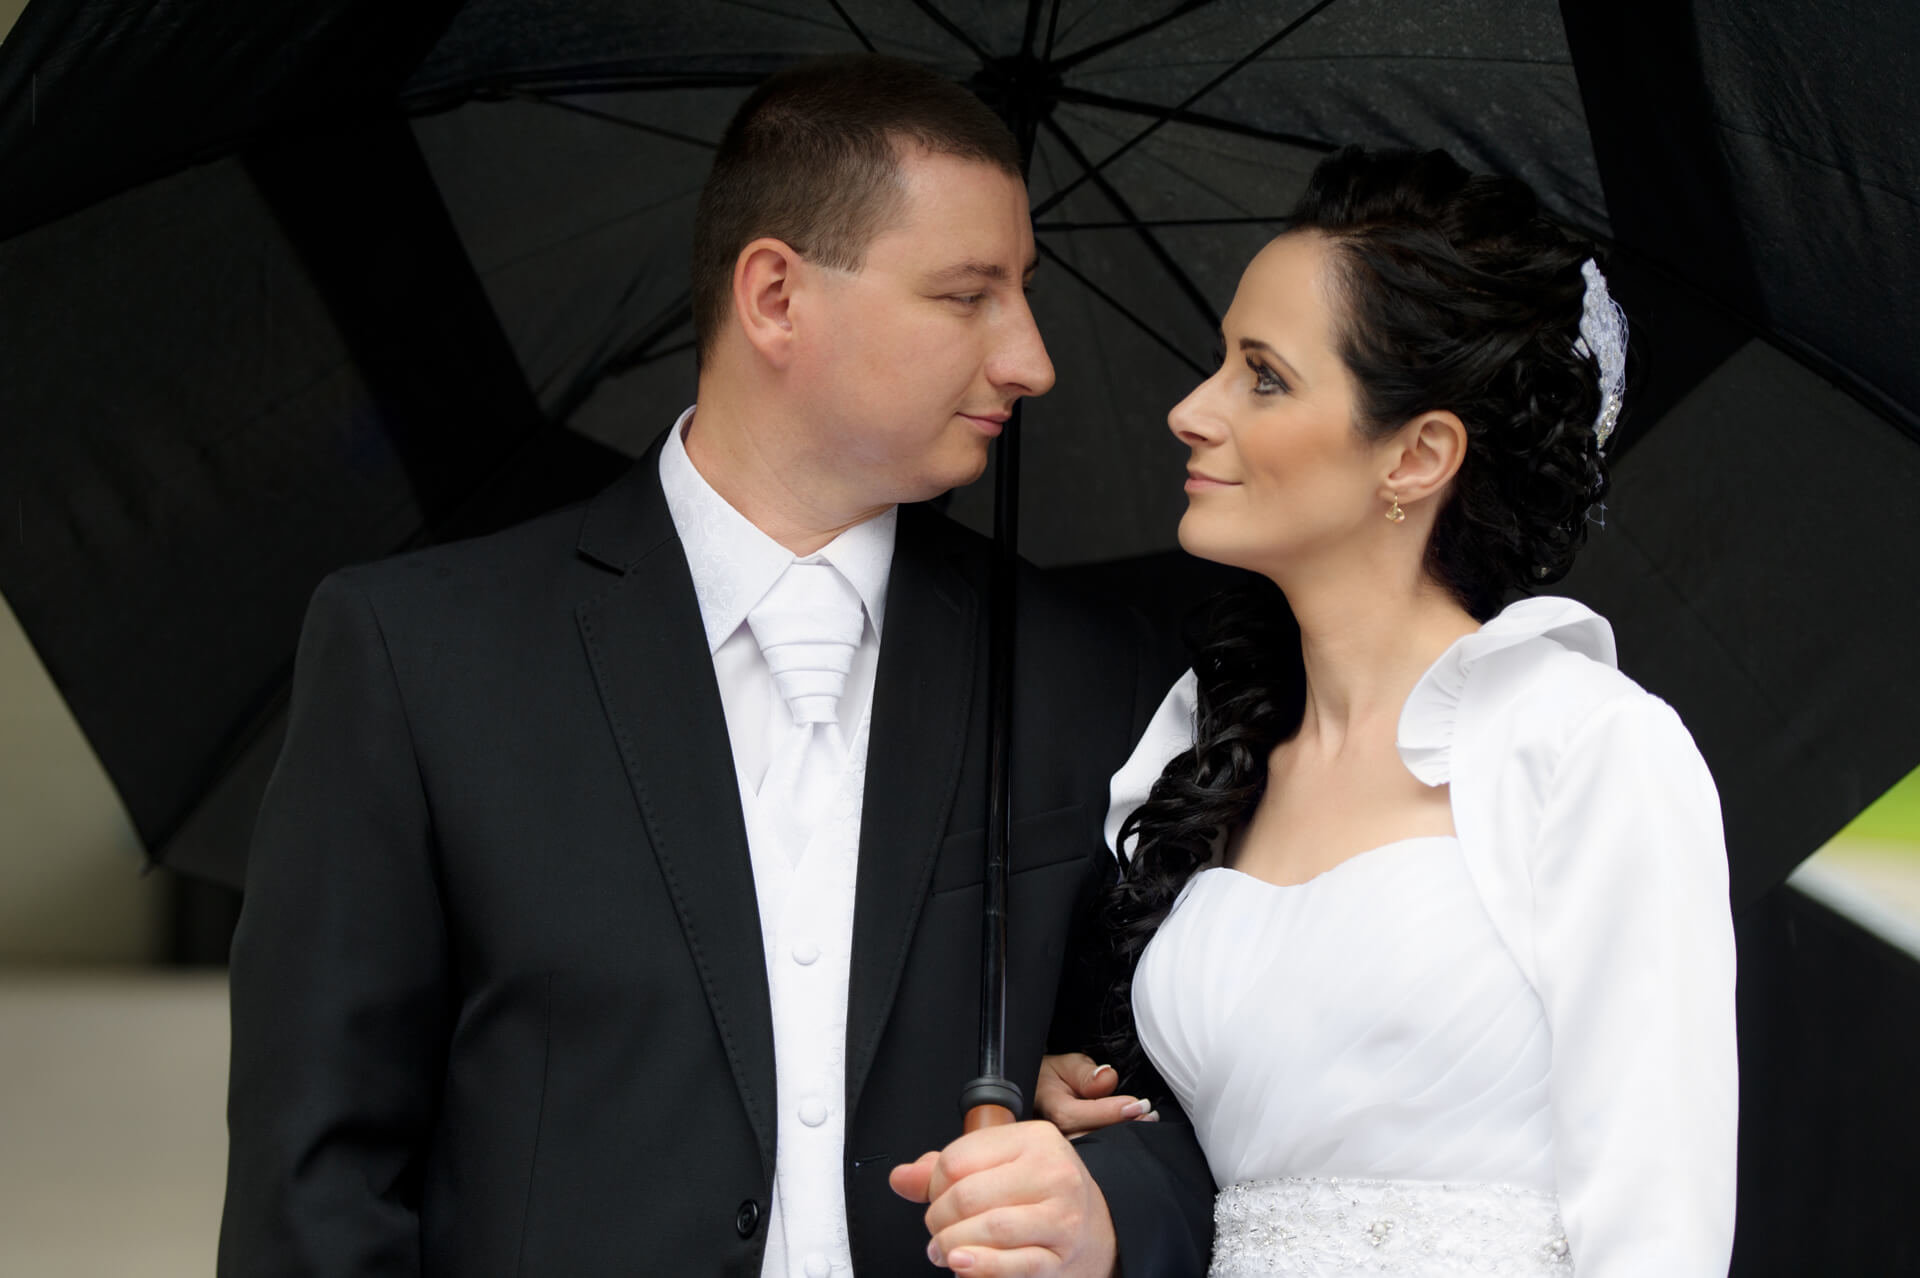 svadba svadobny portrety profesionalne fotenie fotograf Peter Norulak Kosice__26